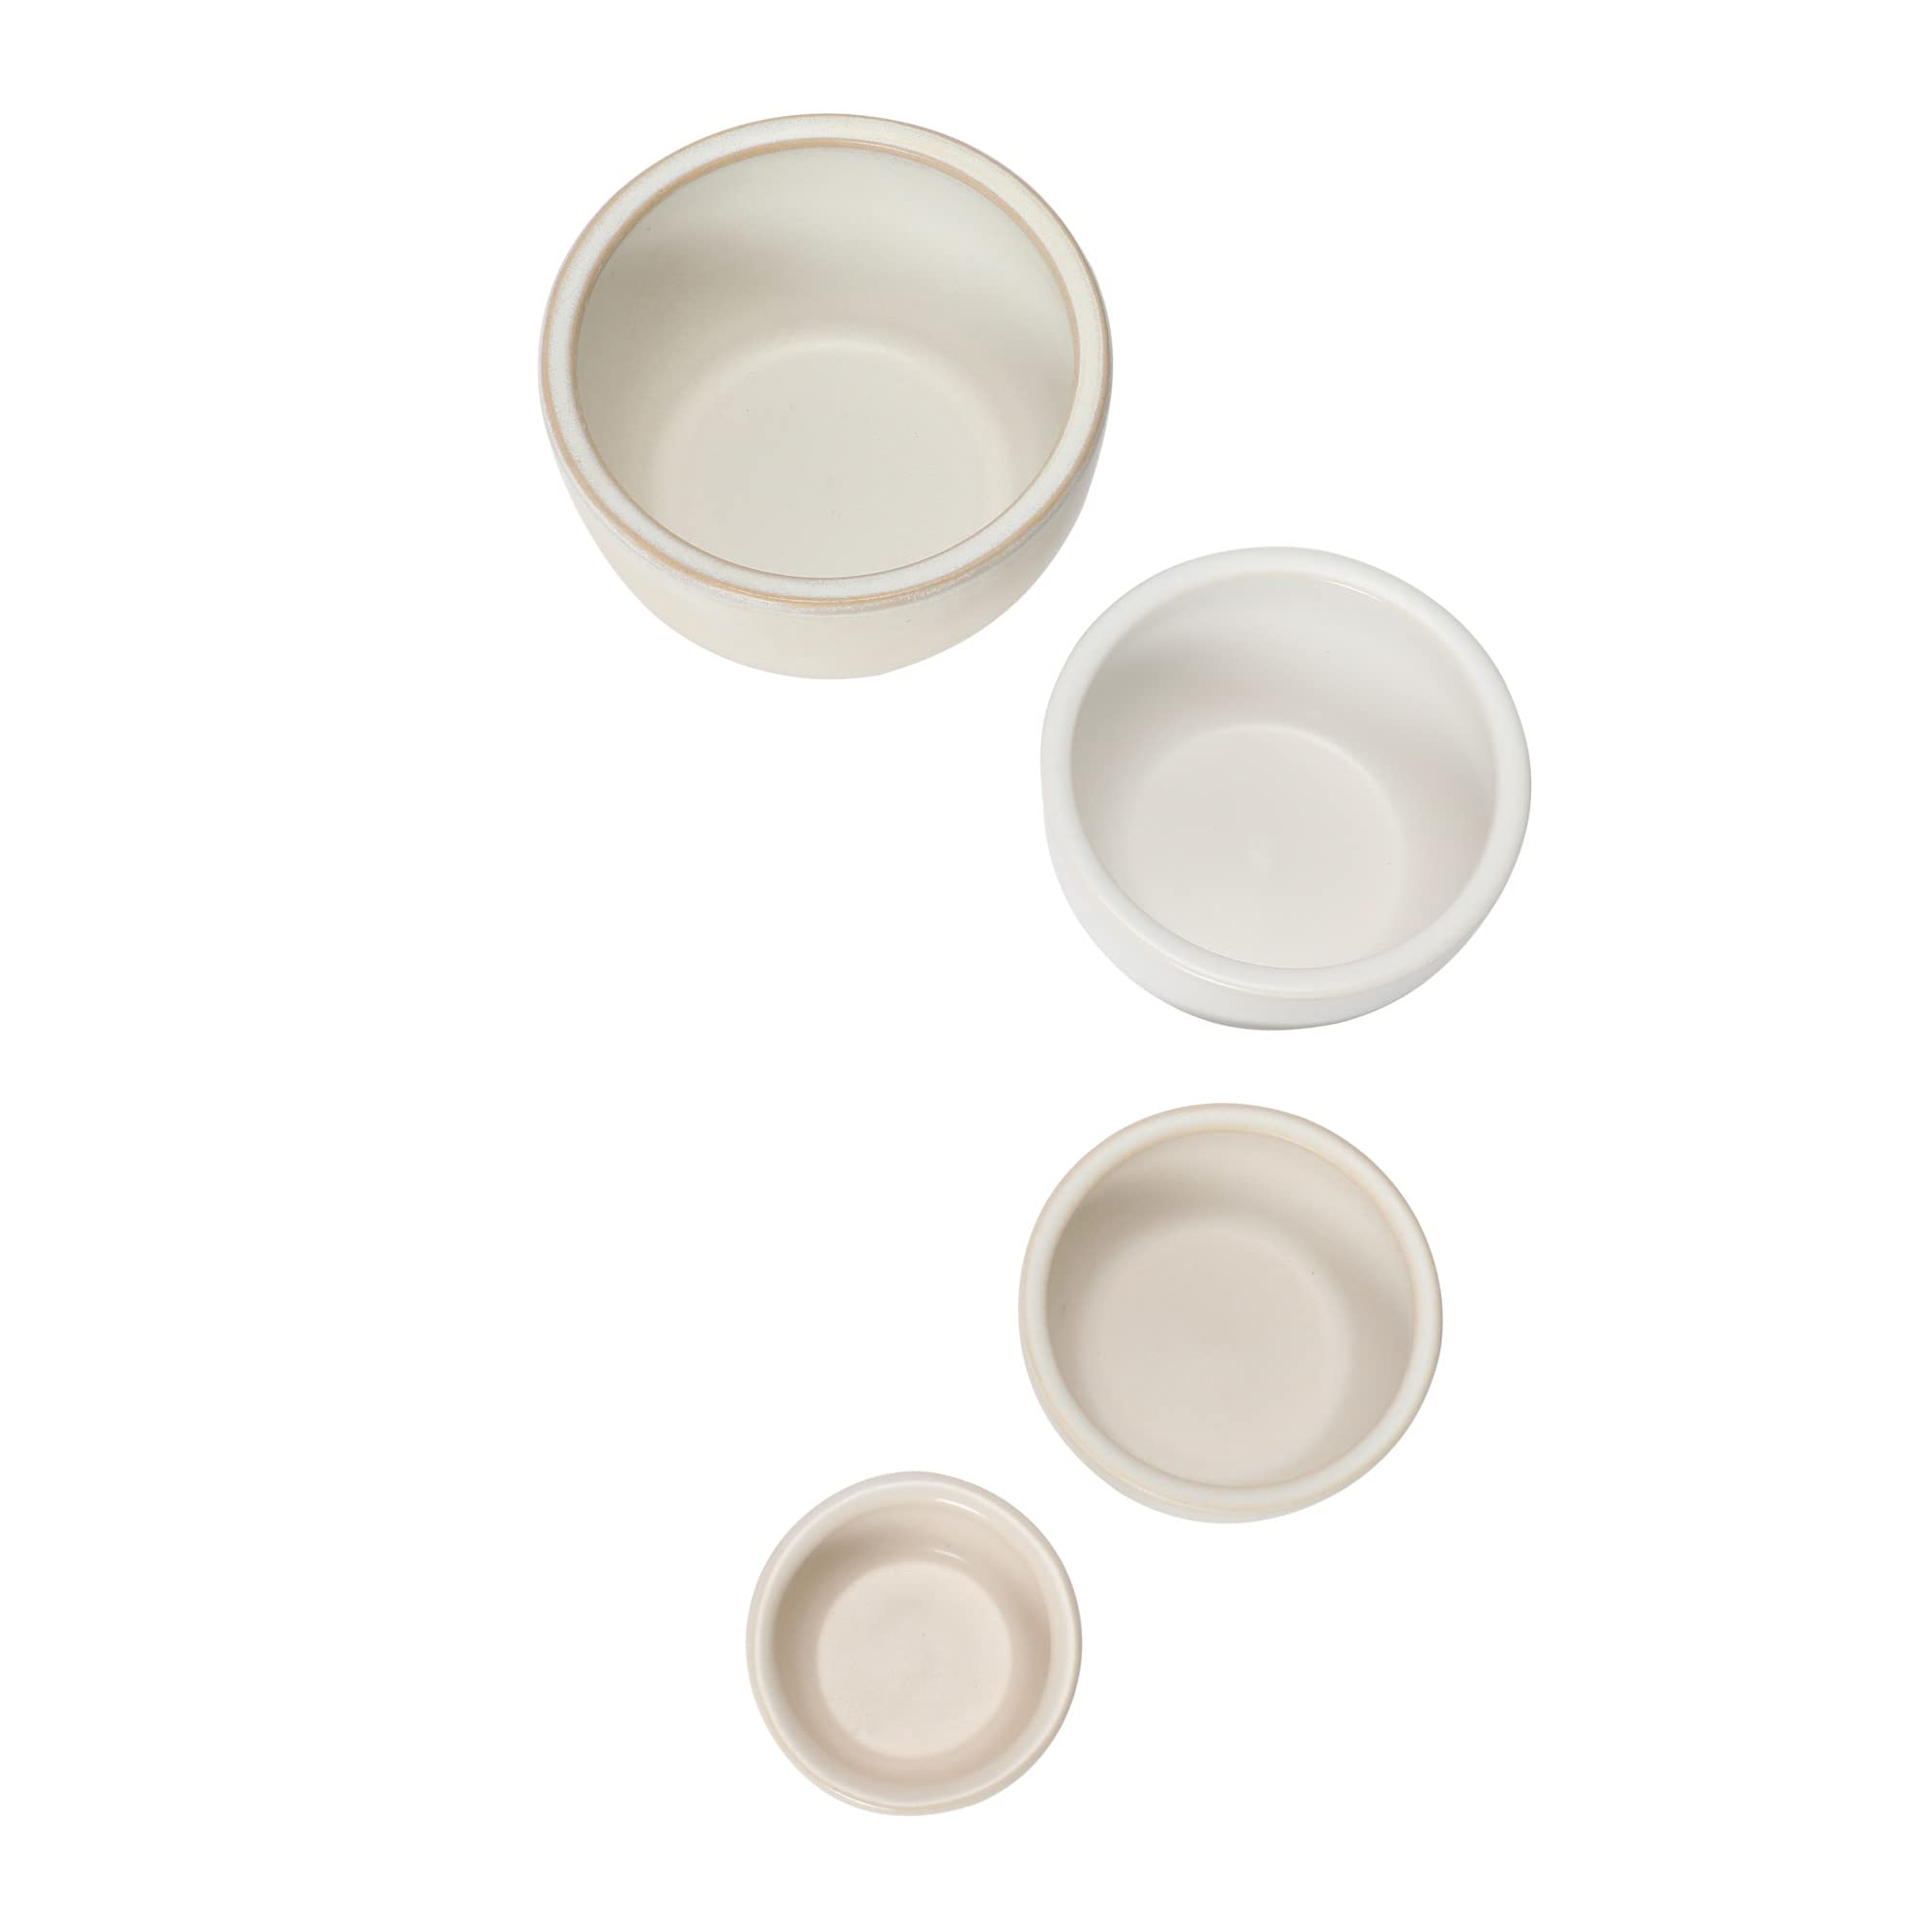 Bloomingville Bloomingville Stoneware Nesting Bowls, White Reactive Glaze, Set of 4